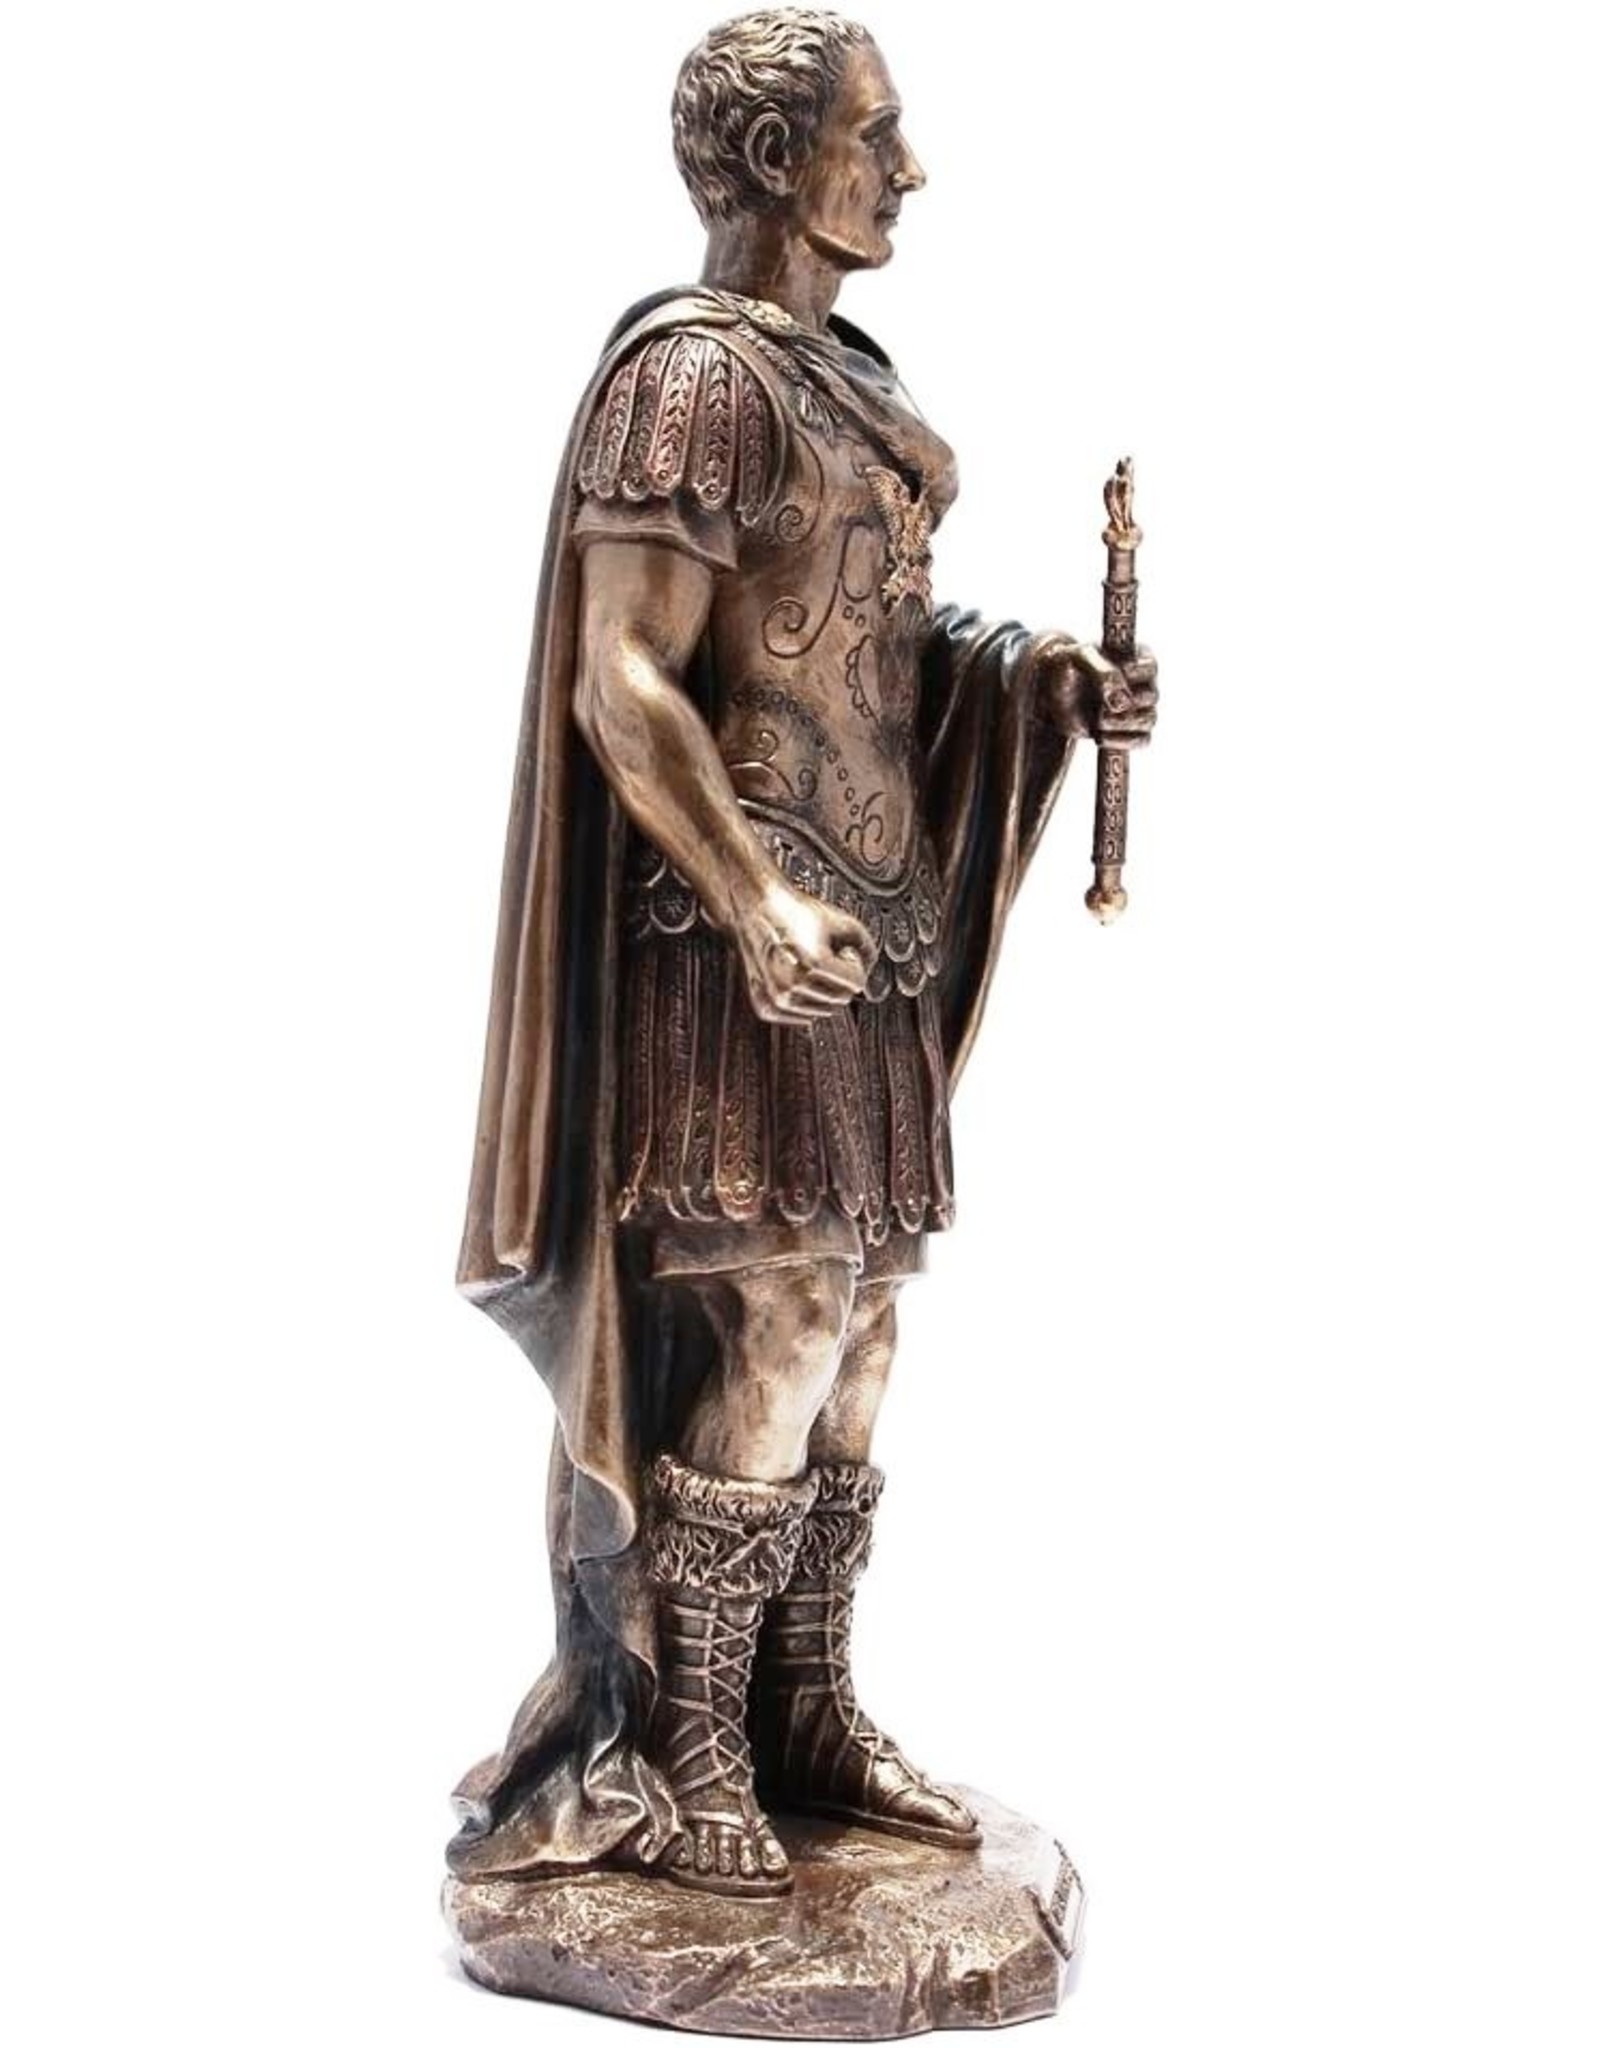 Veronese Design Giftware Figurines Collectables - Gaius Julius Caesar Roman Emperor Veronese Design